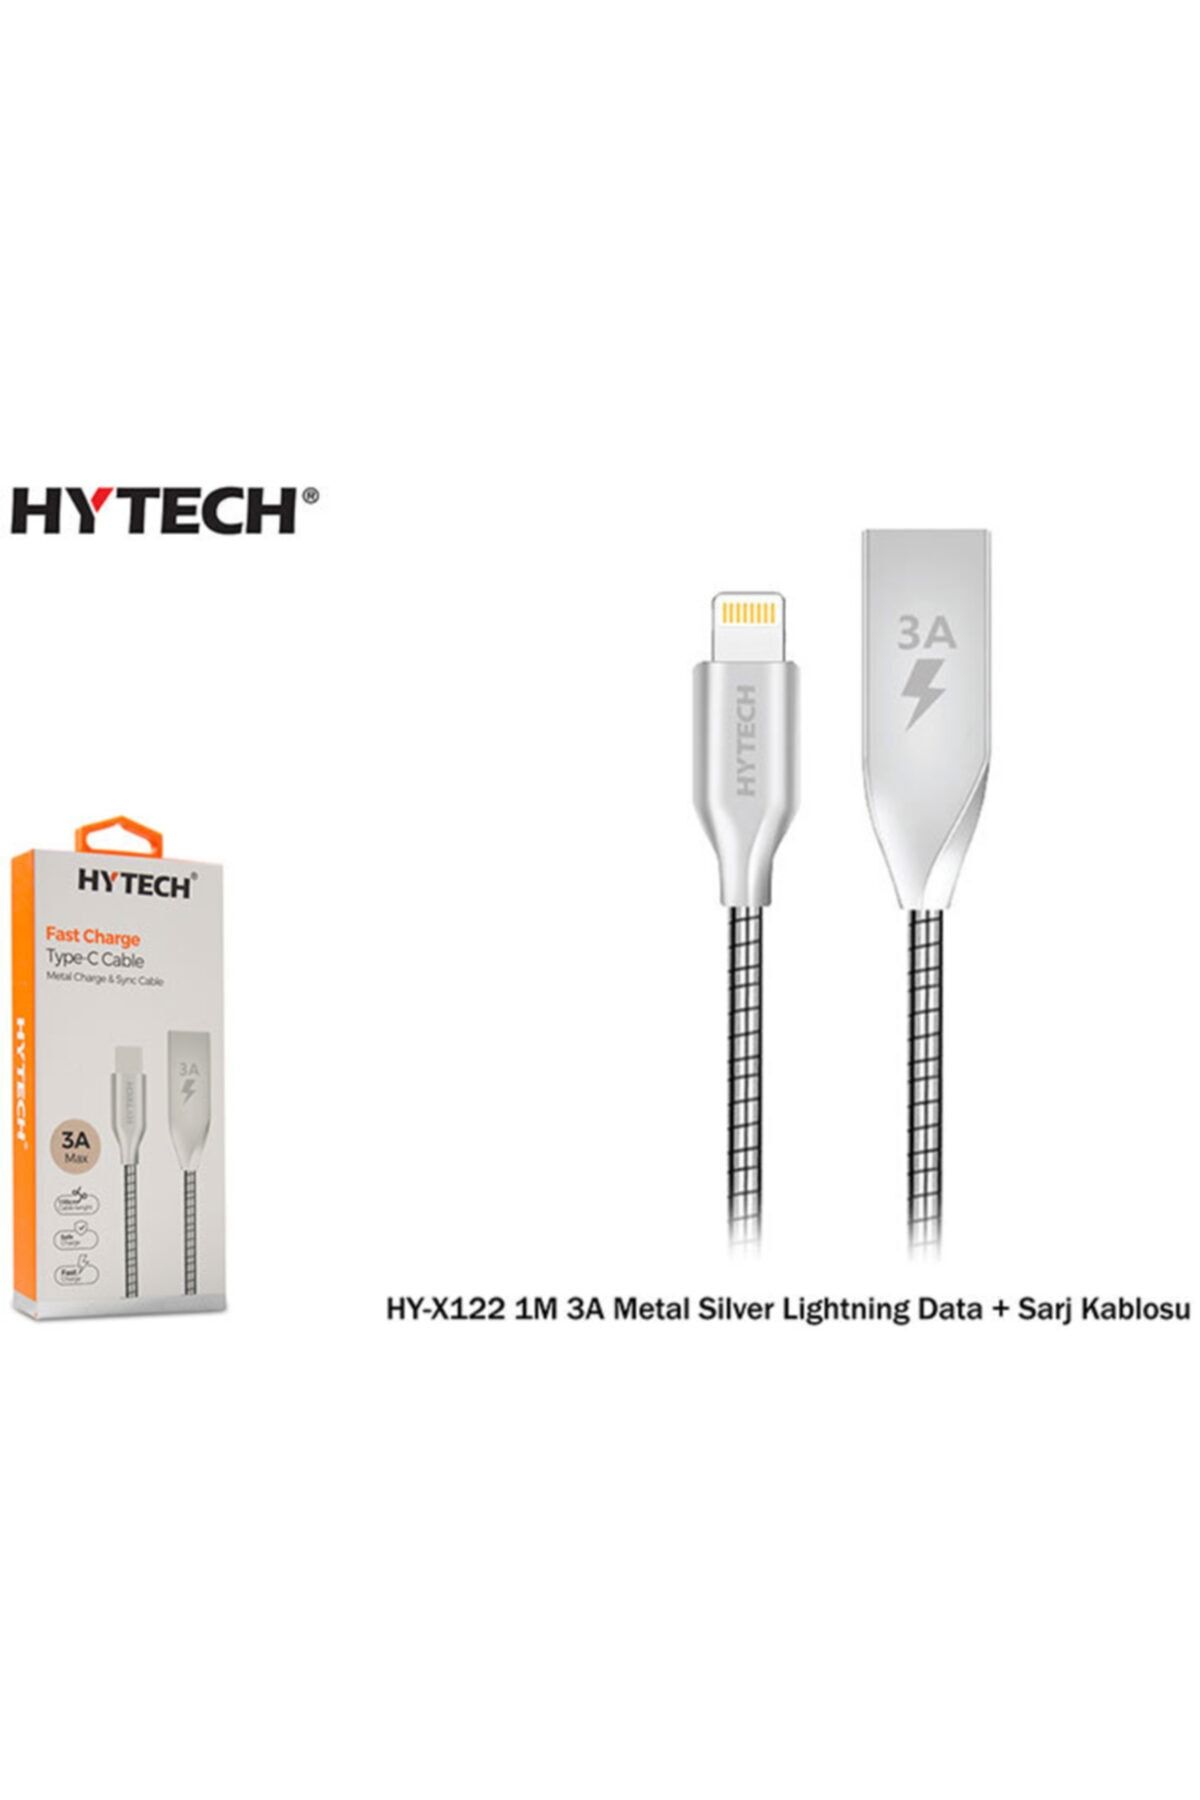 Hytech HY-X122 1M 3A Metal Silver Lightning Data